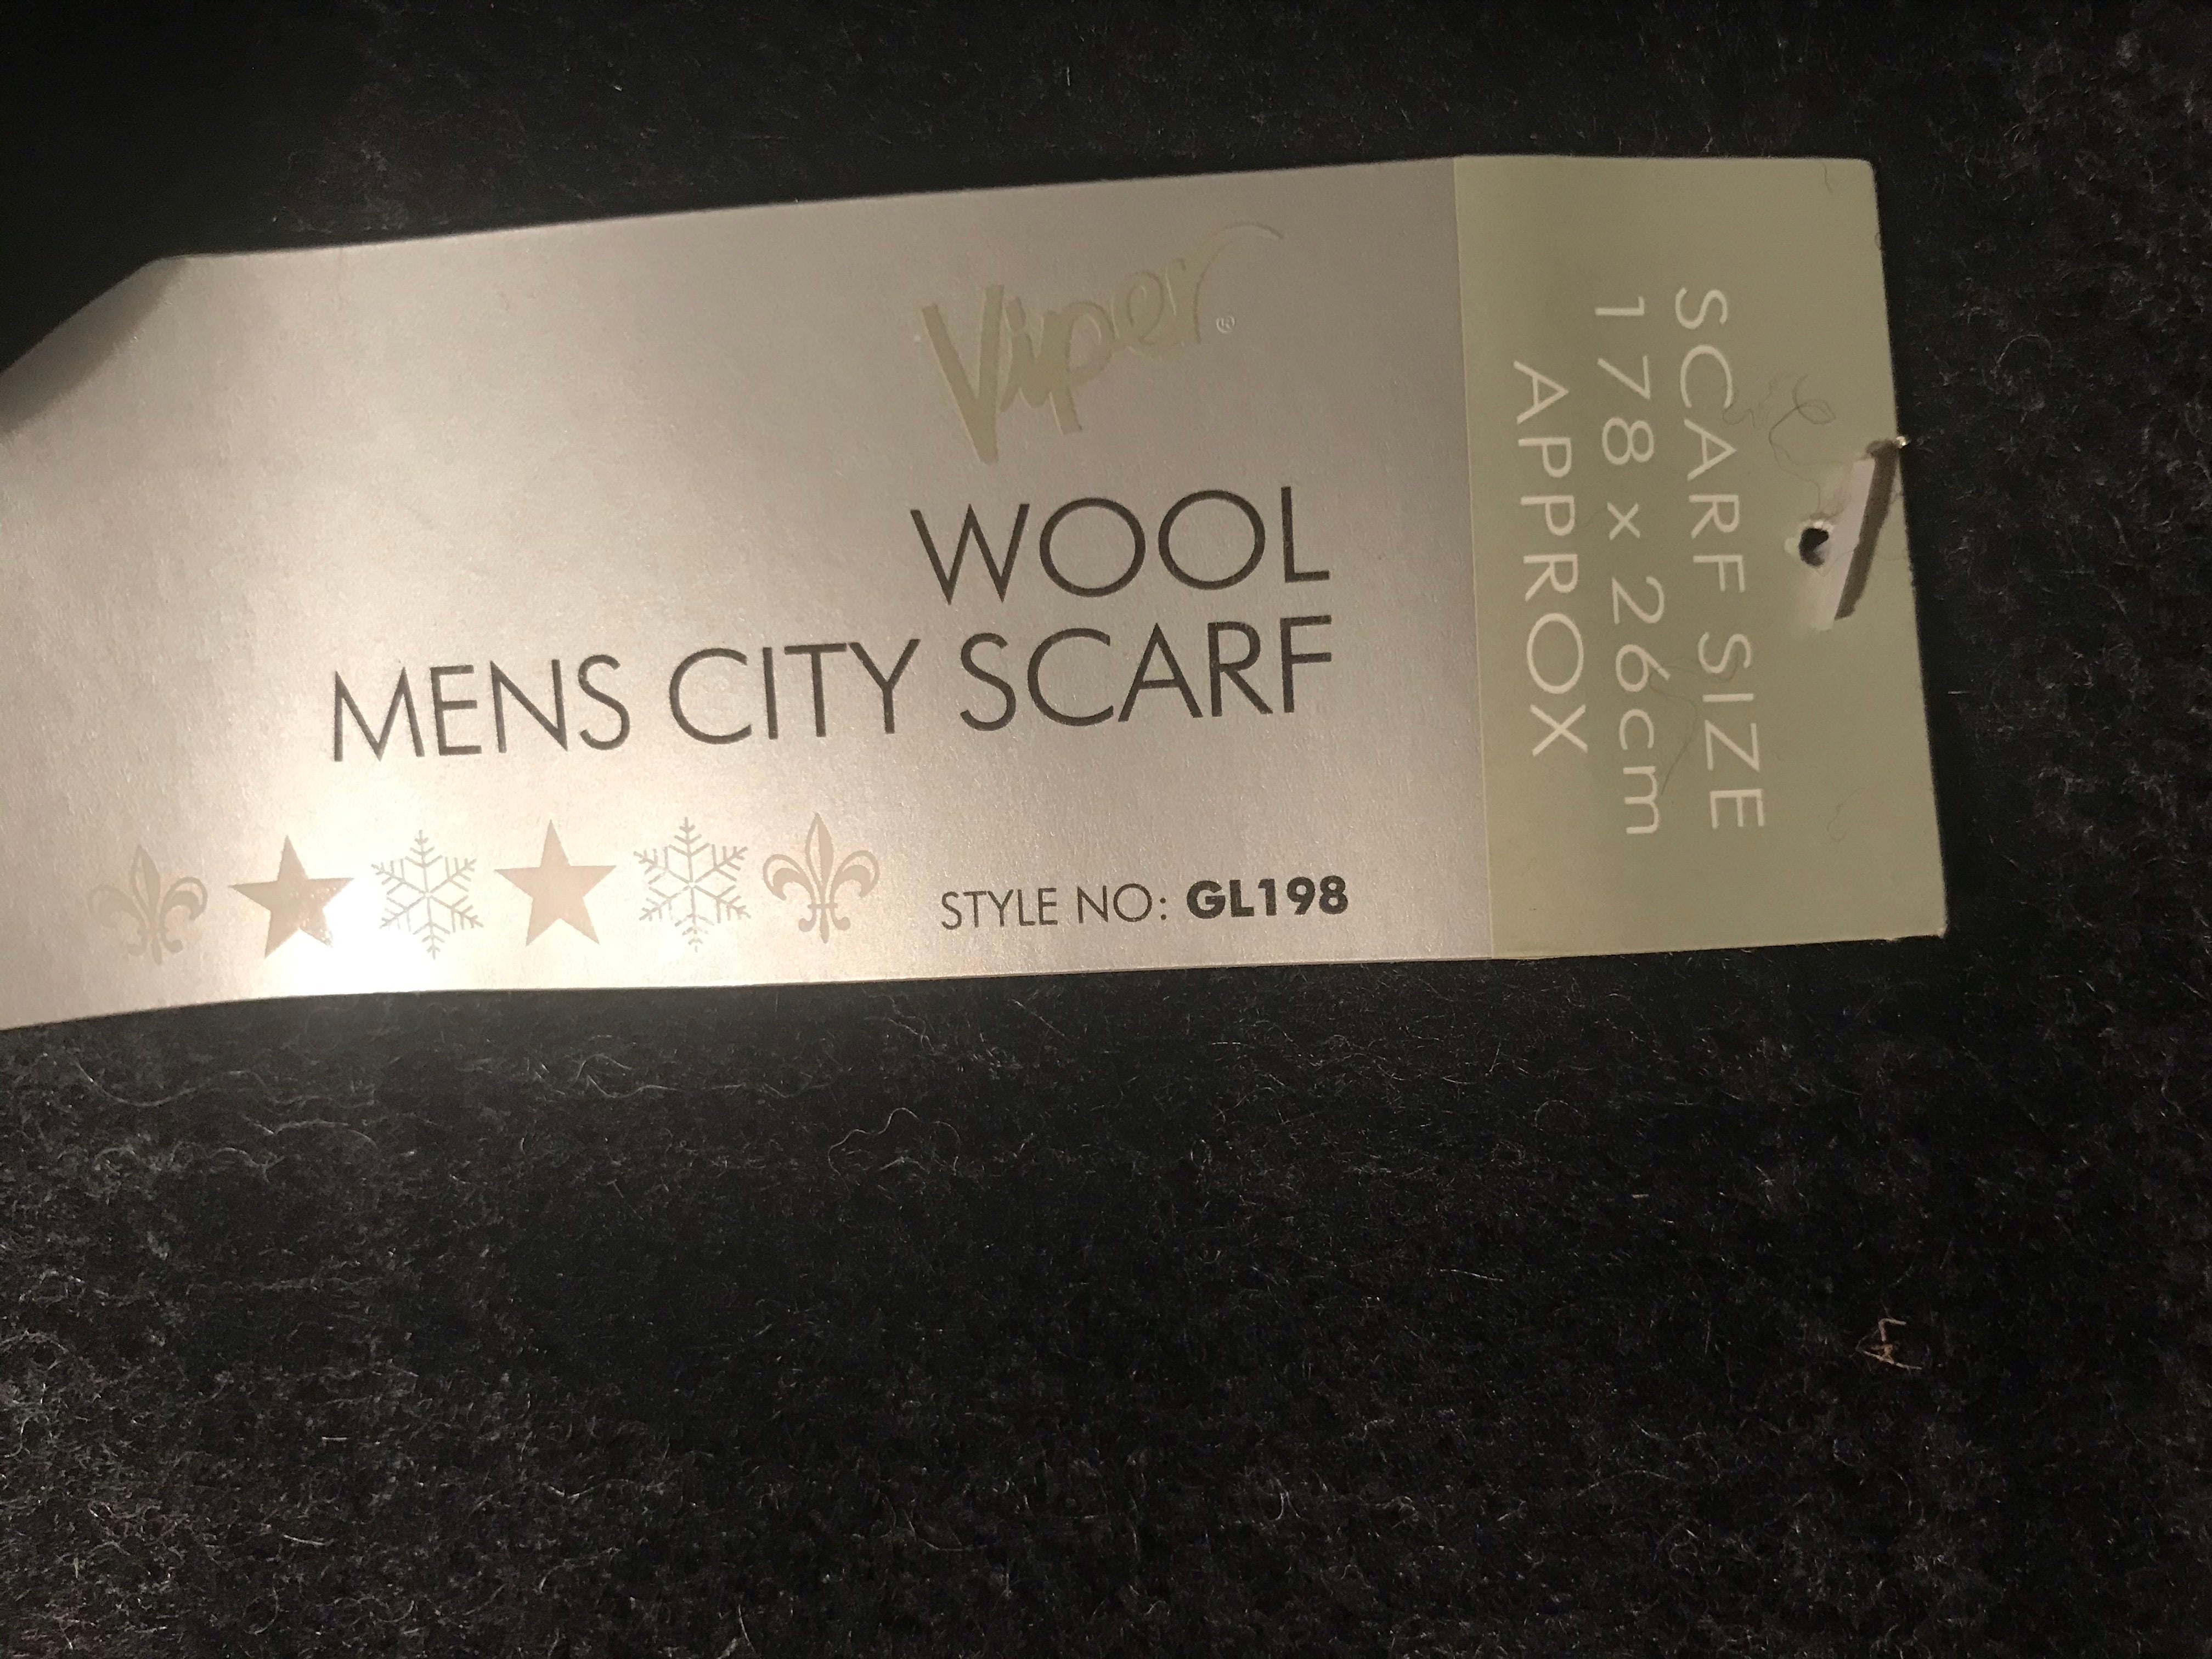 Viper Wool Men’s City Scarf